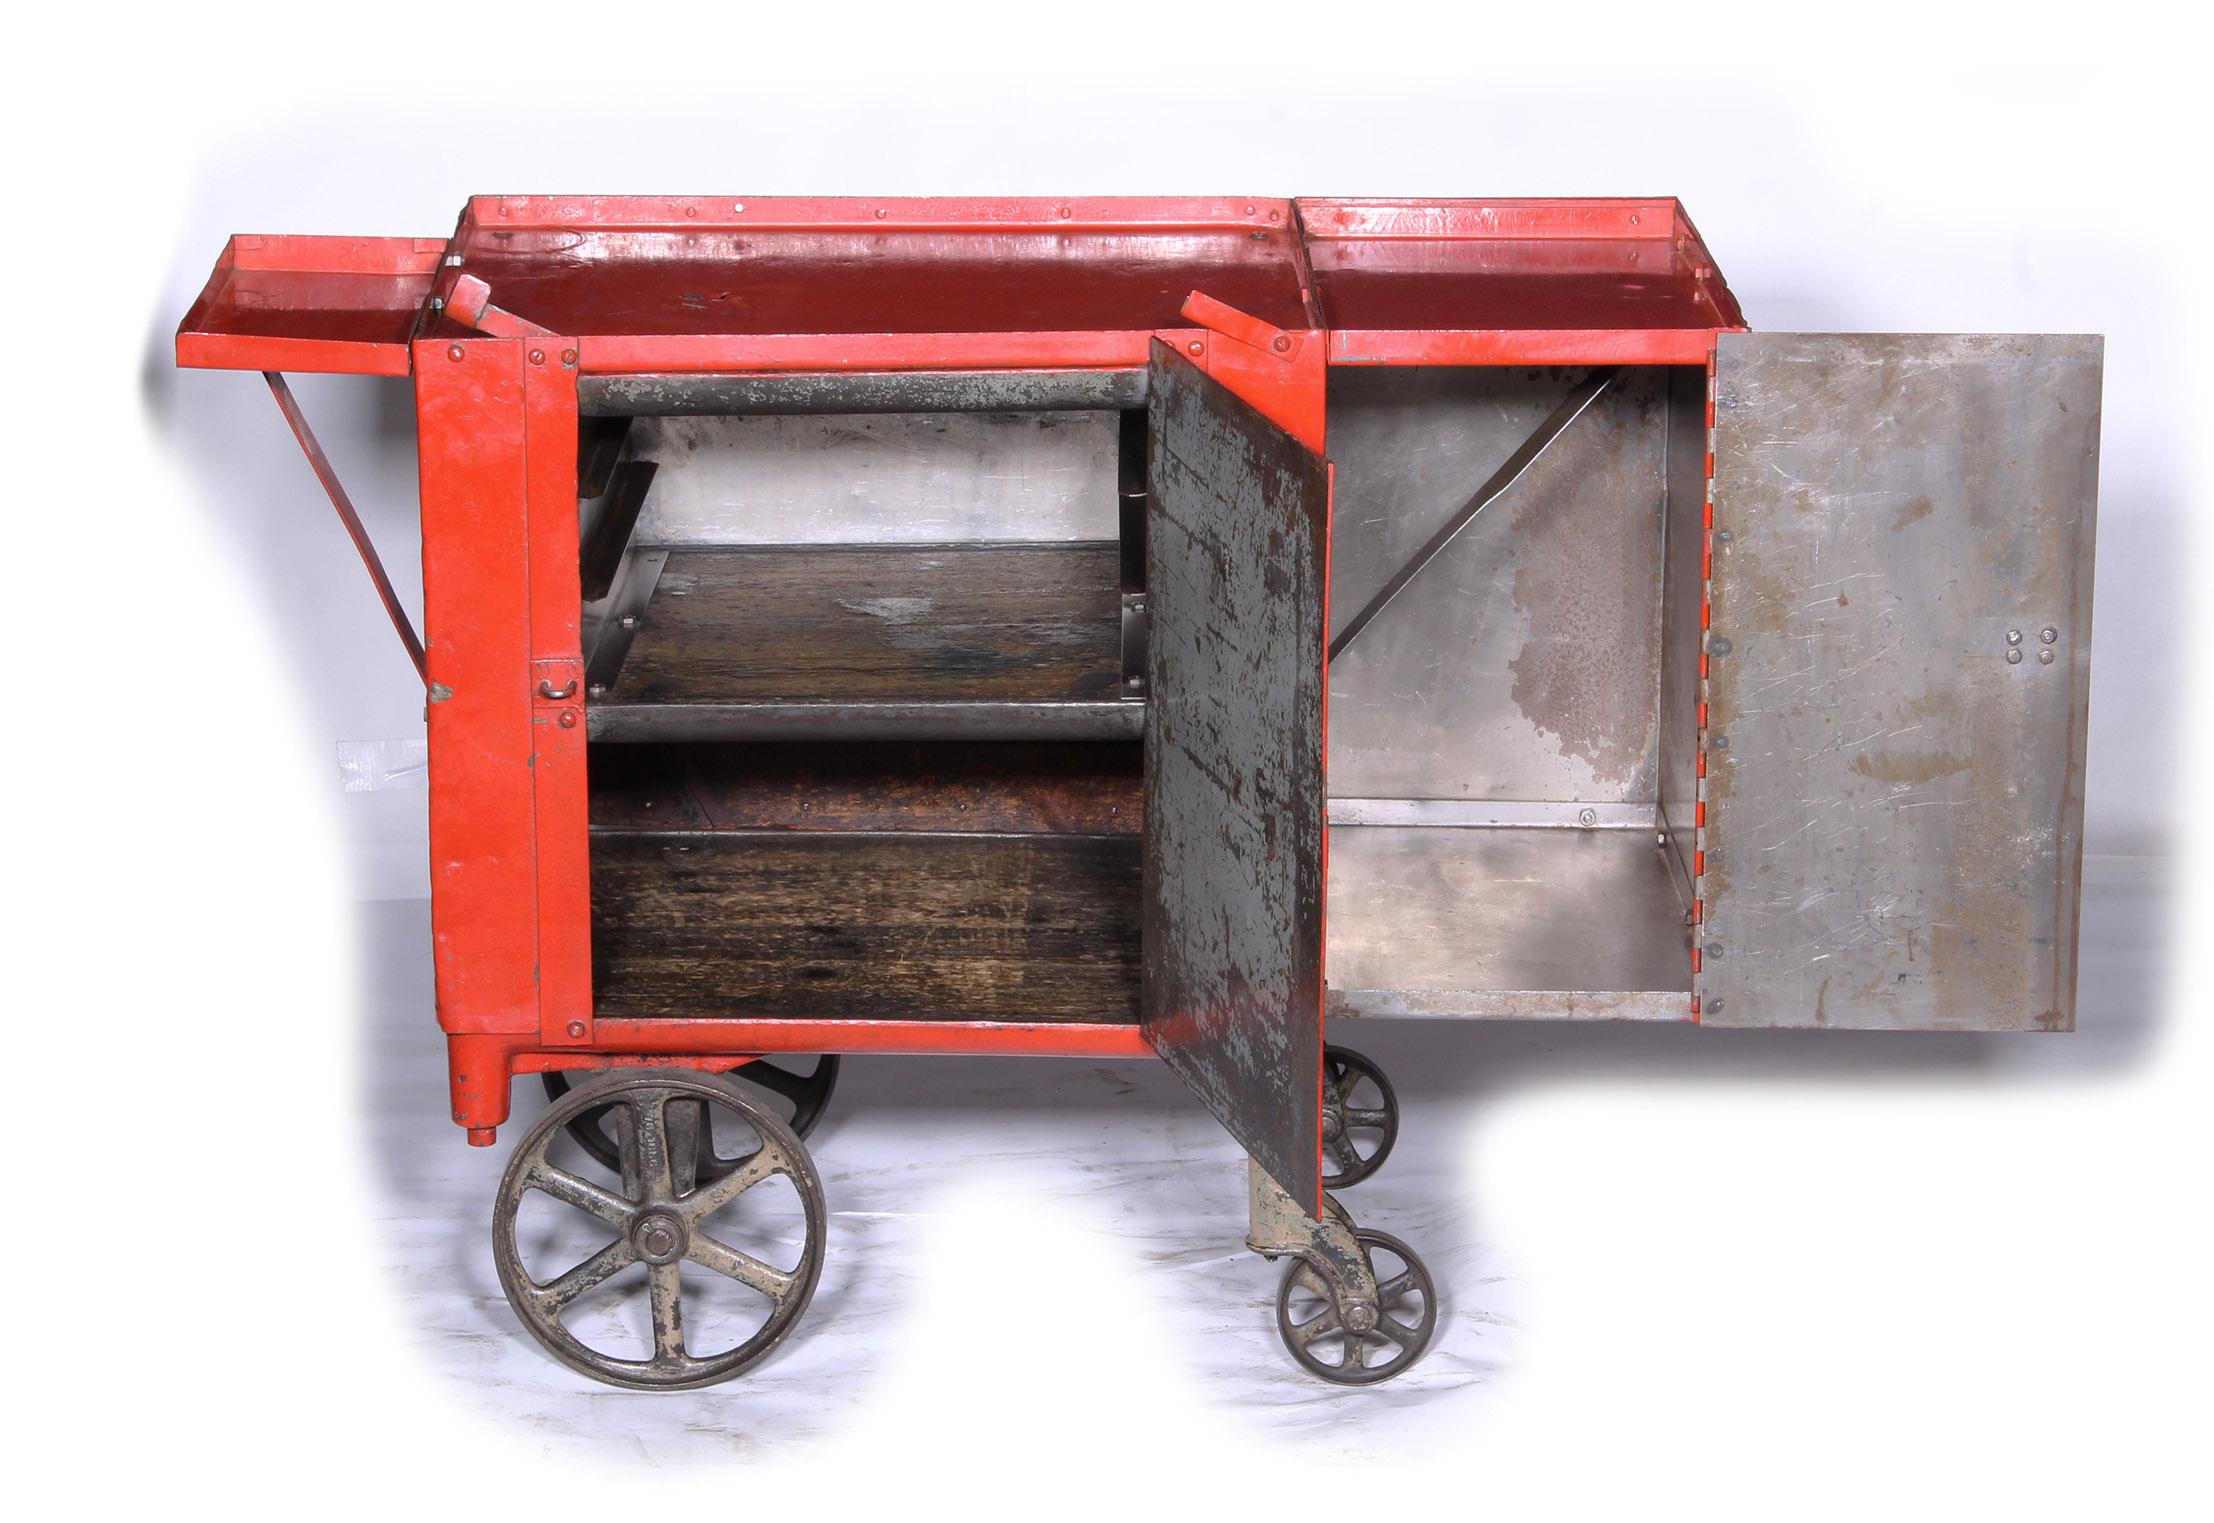 Vintage industrial rolling steel bar cart, one of a kind.